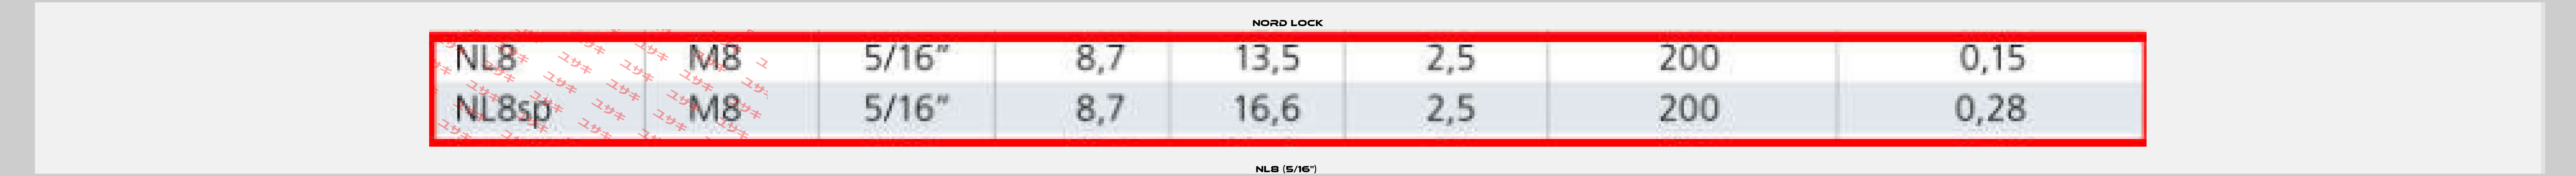 NL8 (5/16")  Nord Lock